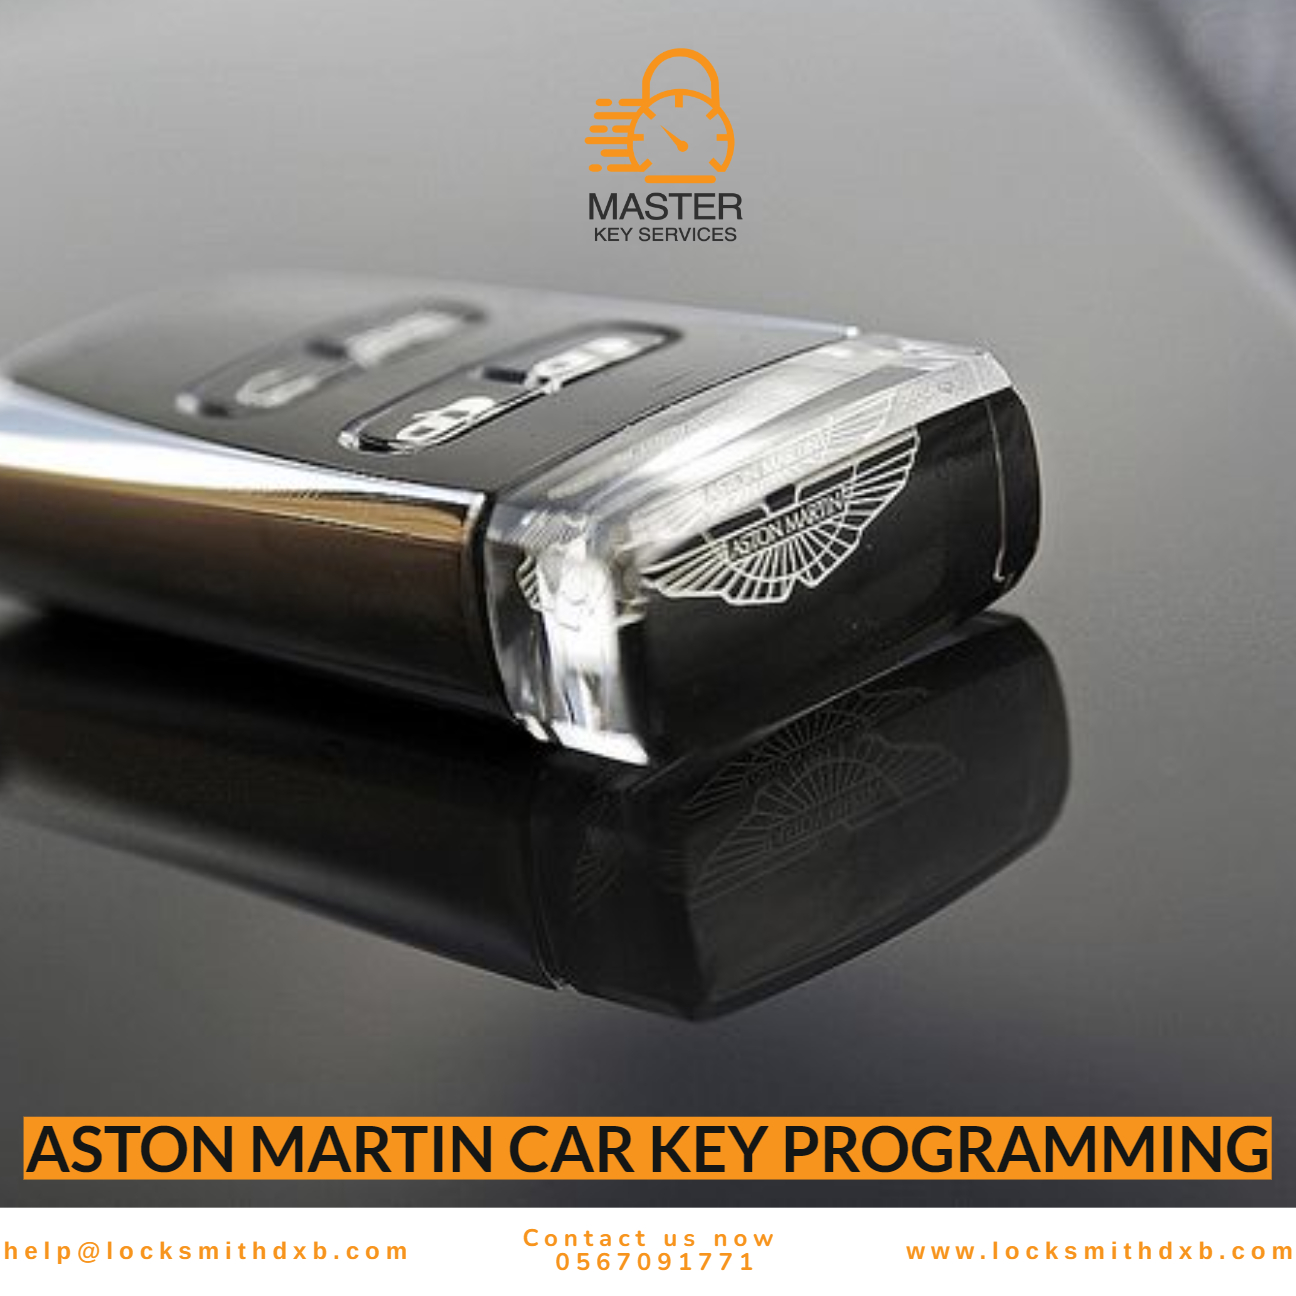 Aston Martin car key programming